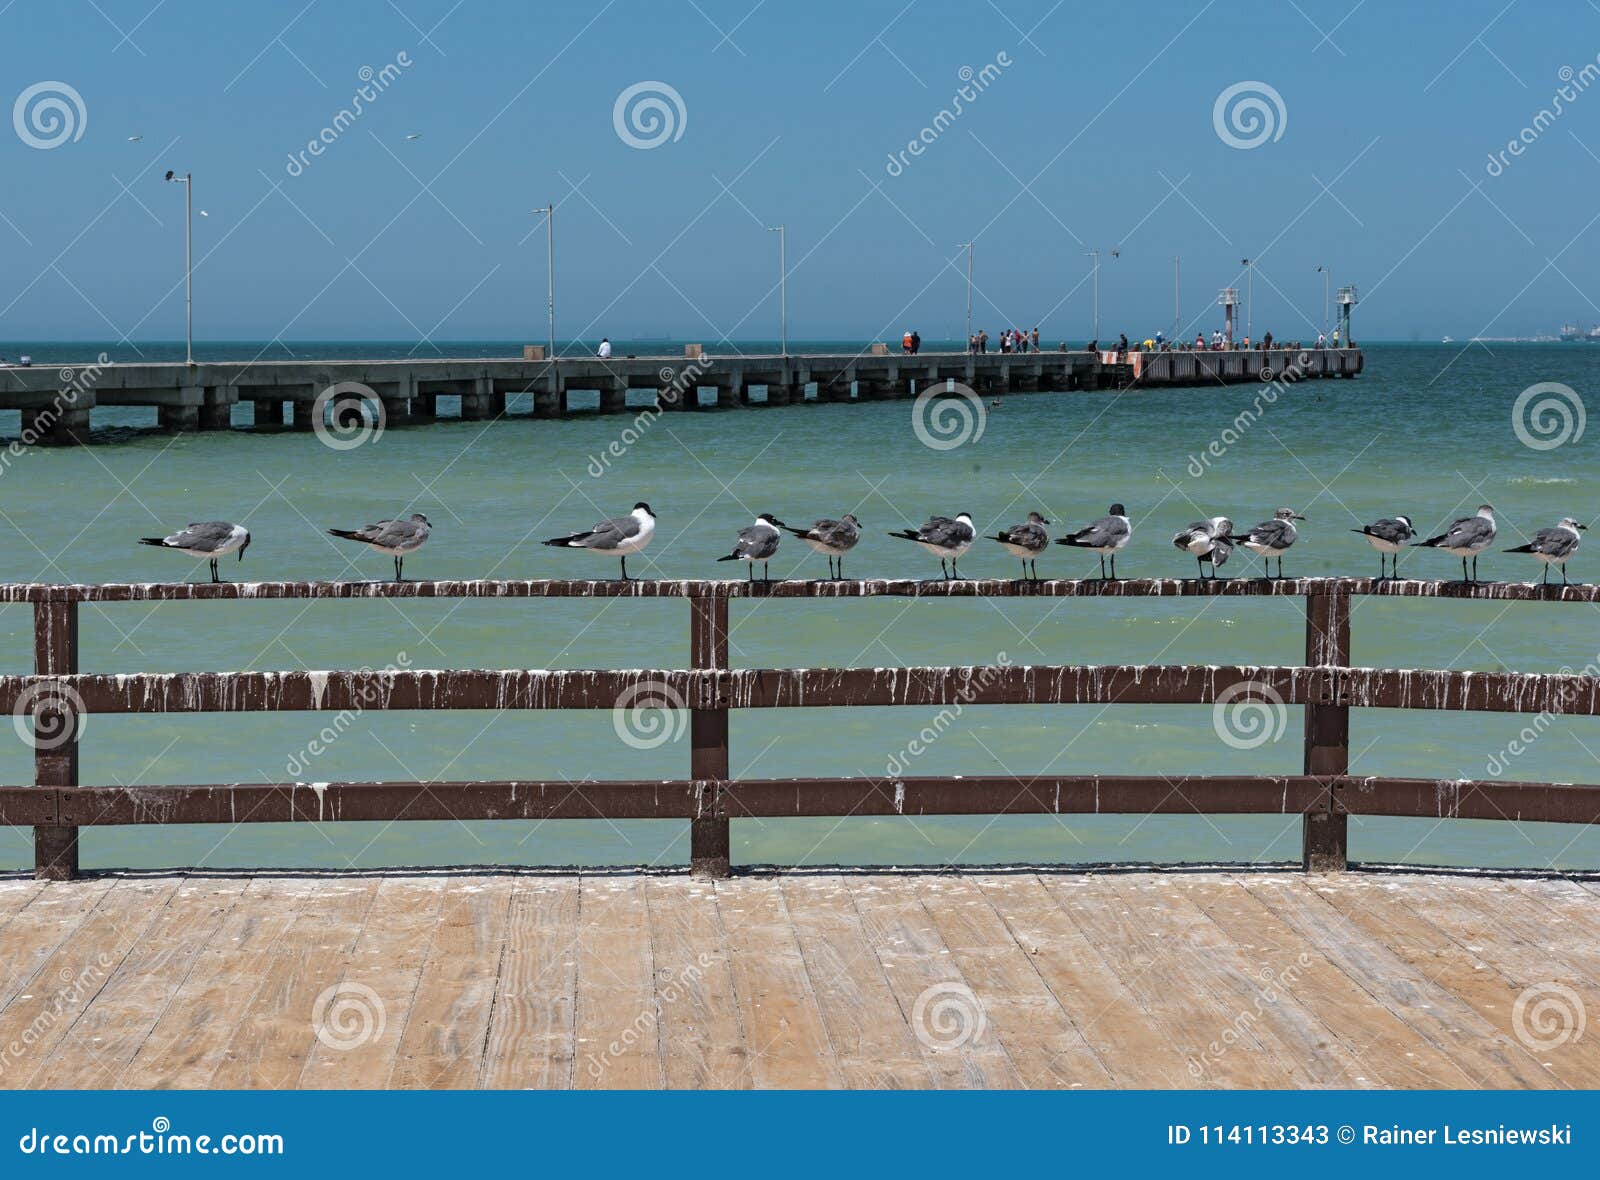 royal tern thalasseus maximus at the seaside promenade of progreso, yucatan, mexico